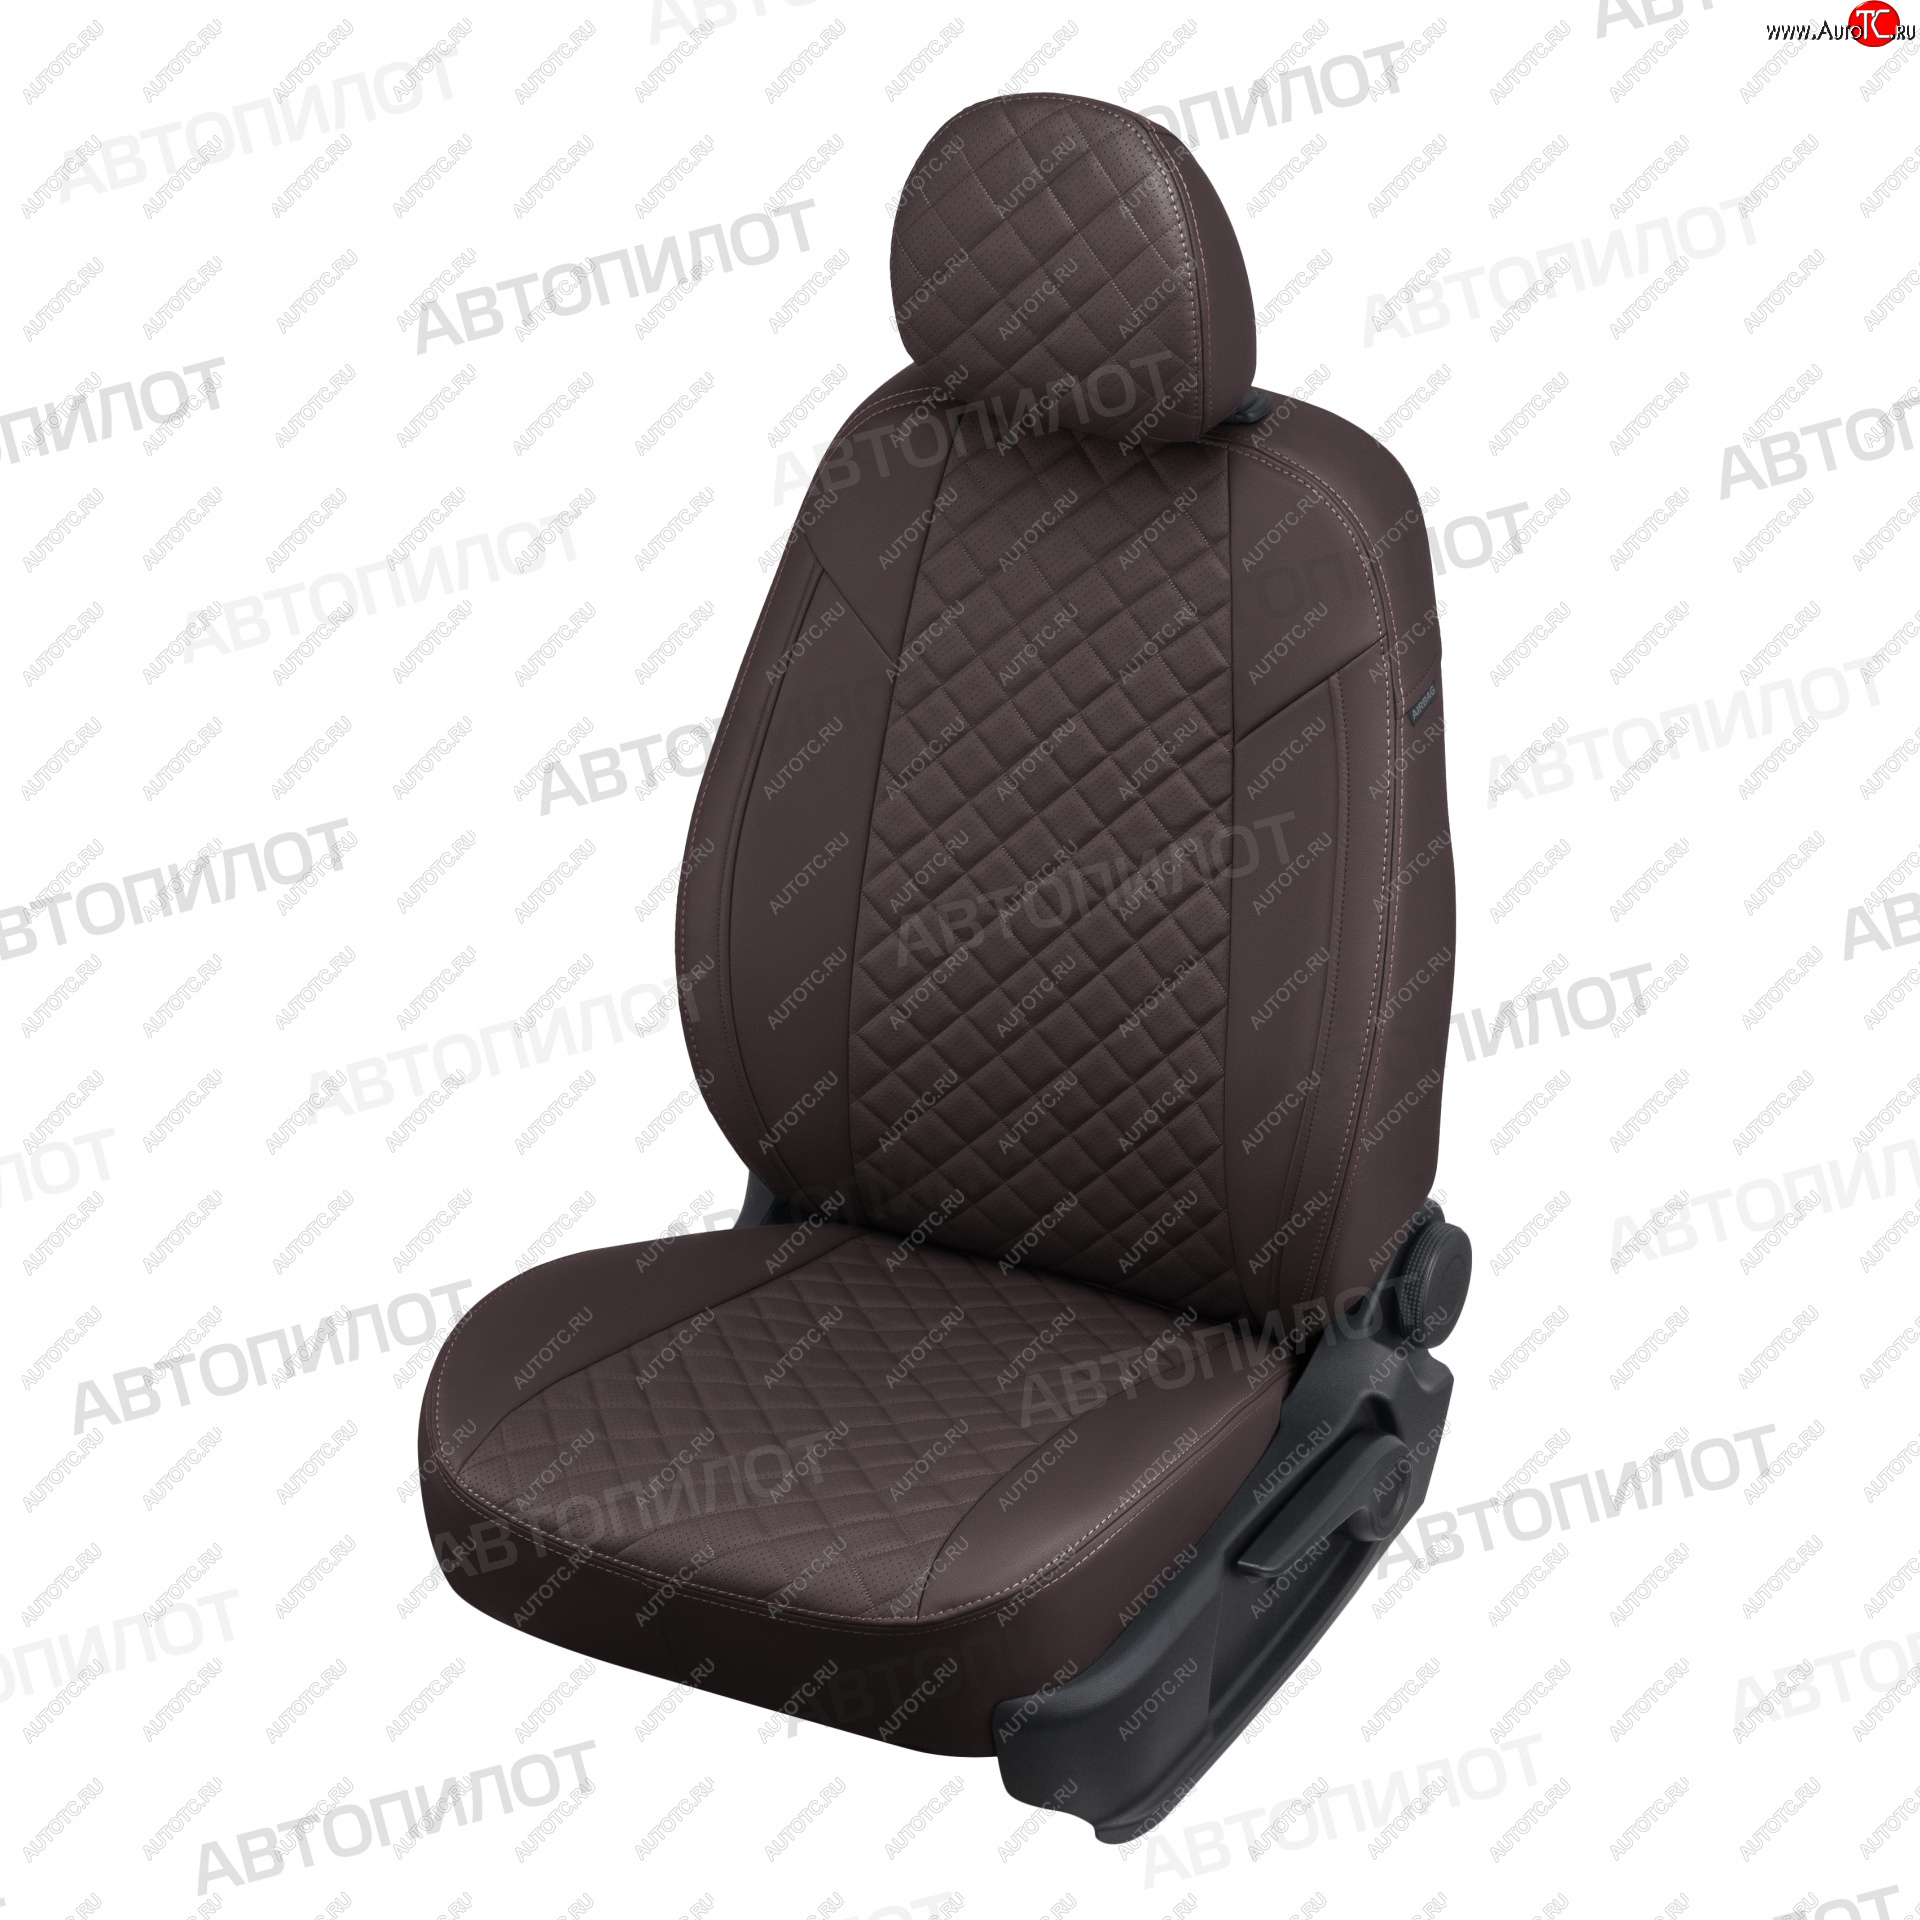 13 999 р. Чехлы сидений (экокожа) Автопилот Ромб  Ford Mondeo (2000-2007) (шоколад)